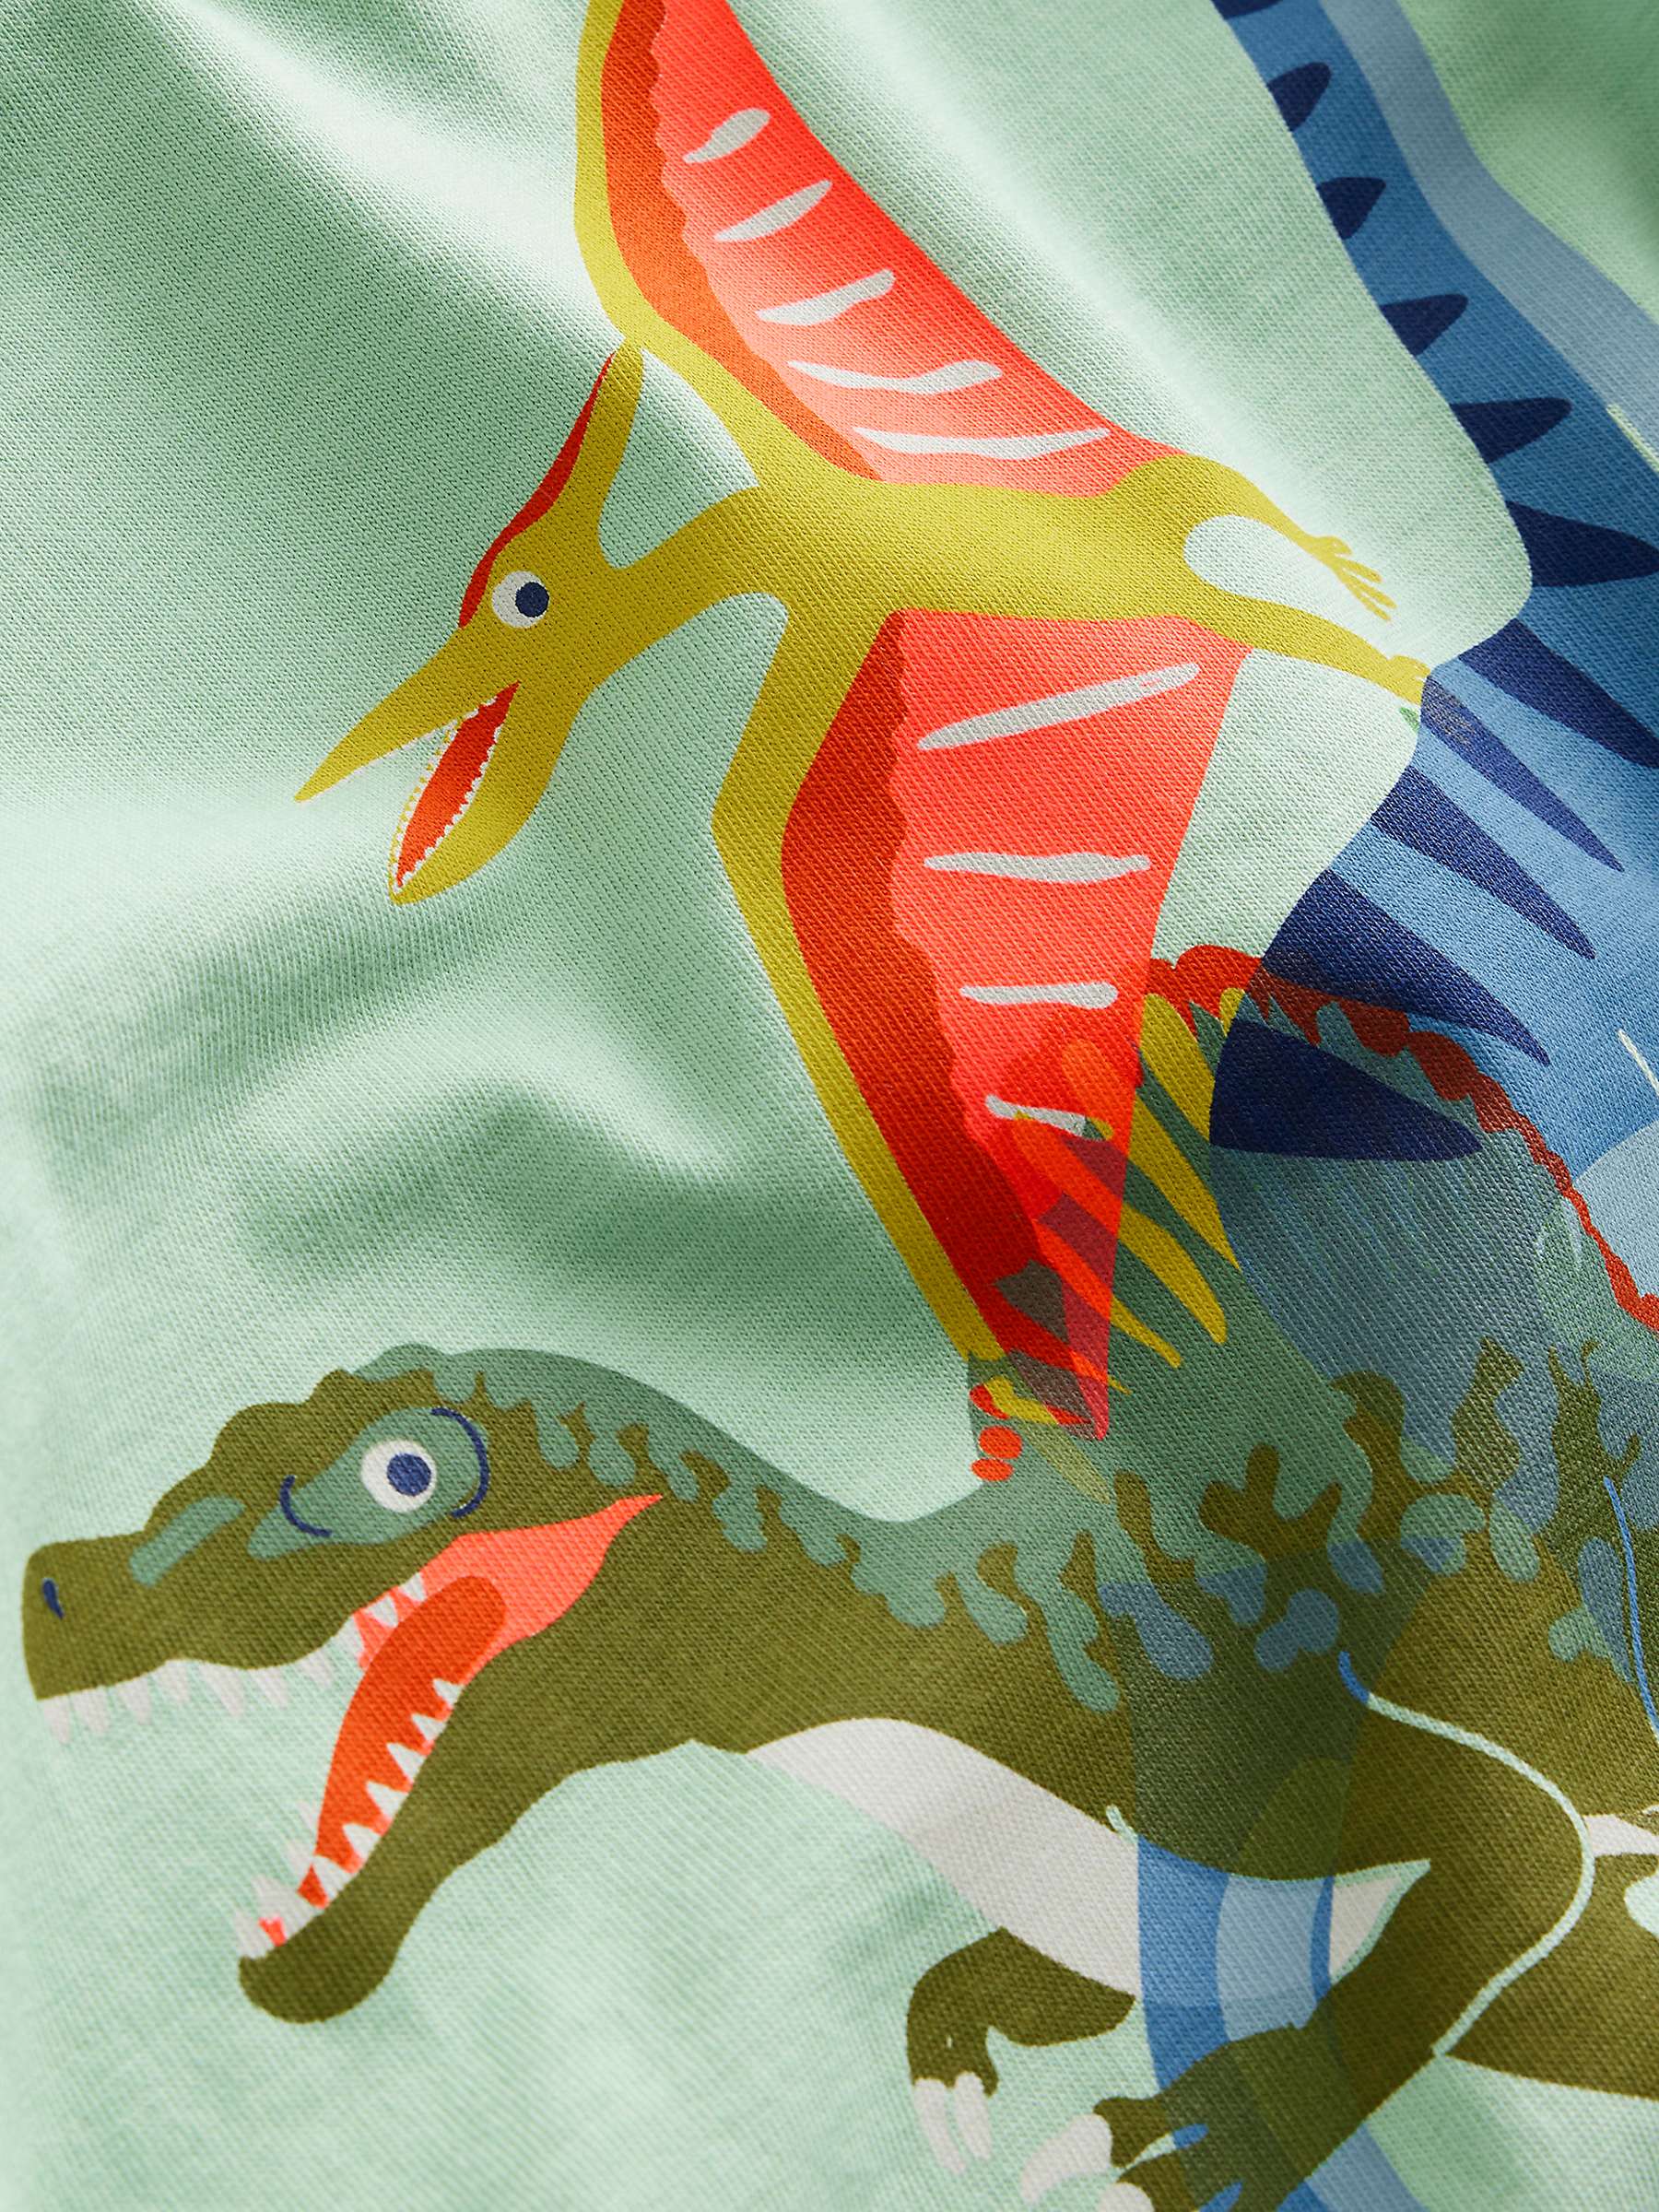 Buy Mini Boden Kids' Riso Dinosaur Printed T-Shirt, Pistachio/Multi Online at johnlewis.com